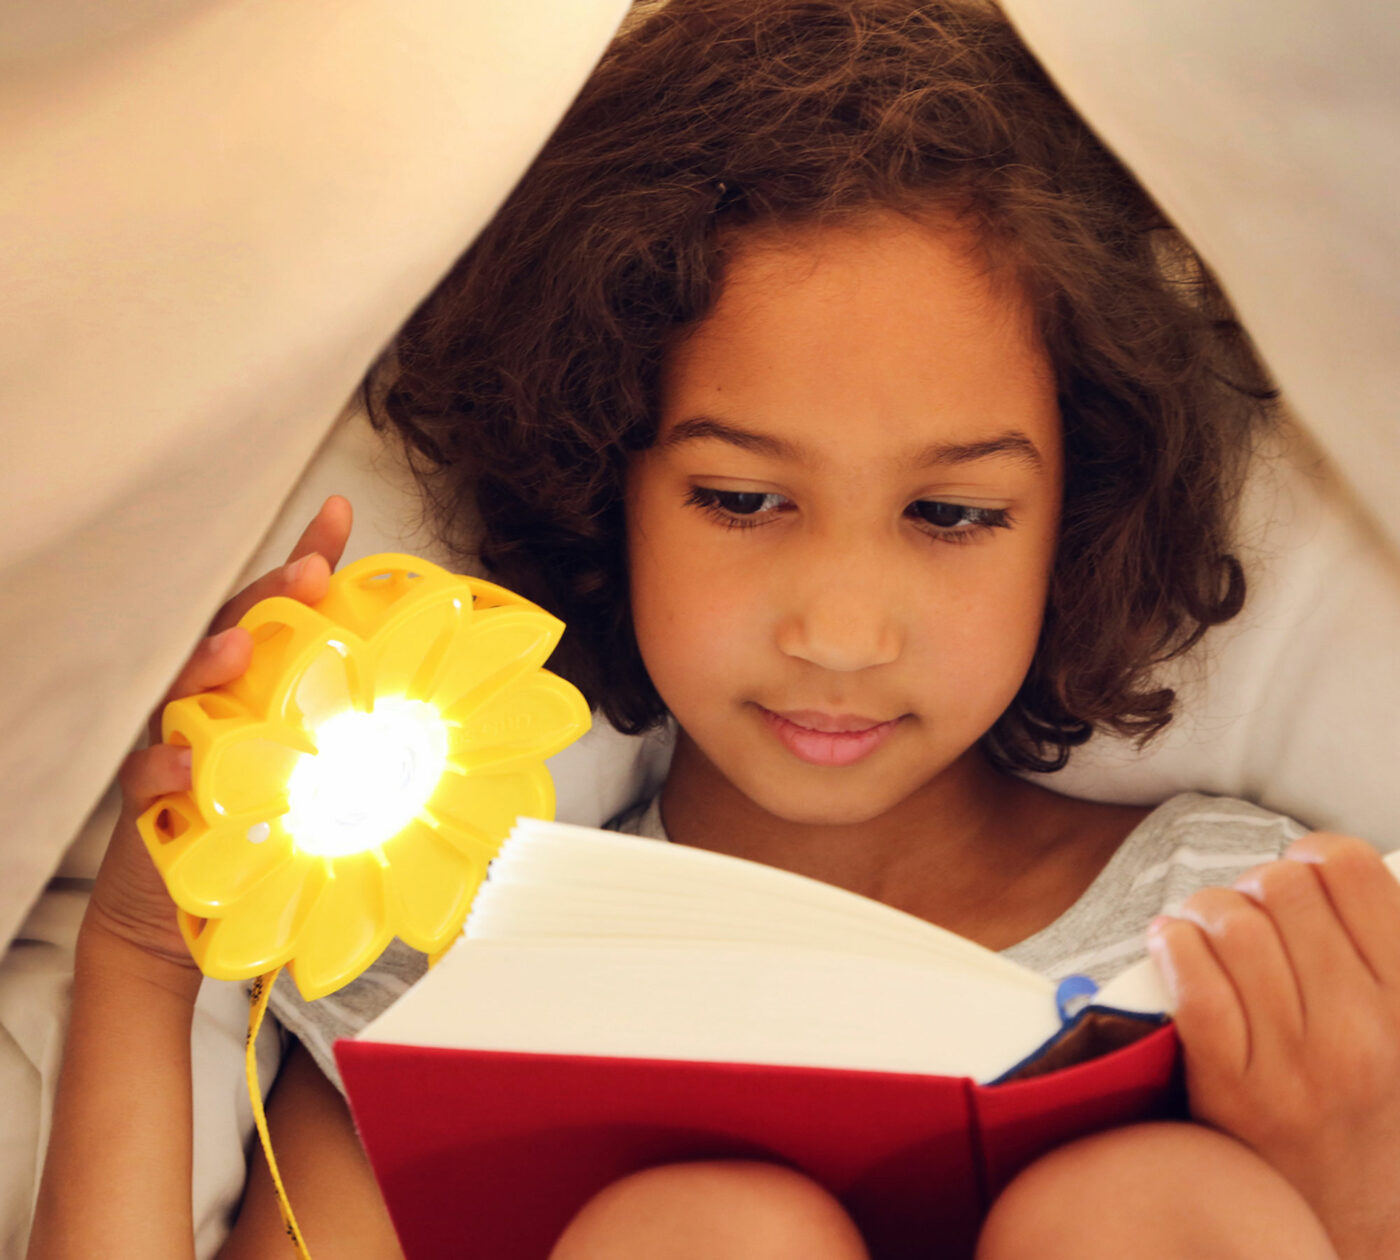 Little Sun-Solarlampe für Kinder // HIMBEER